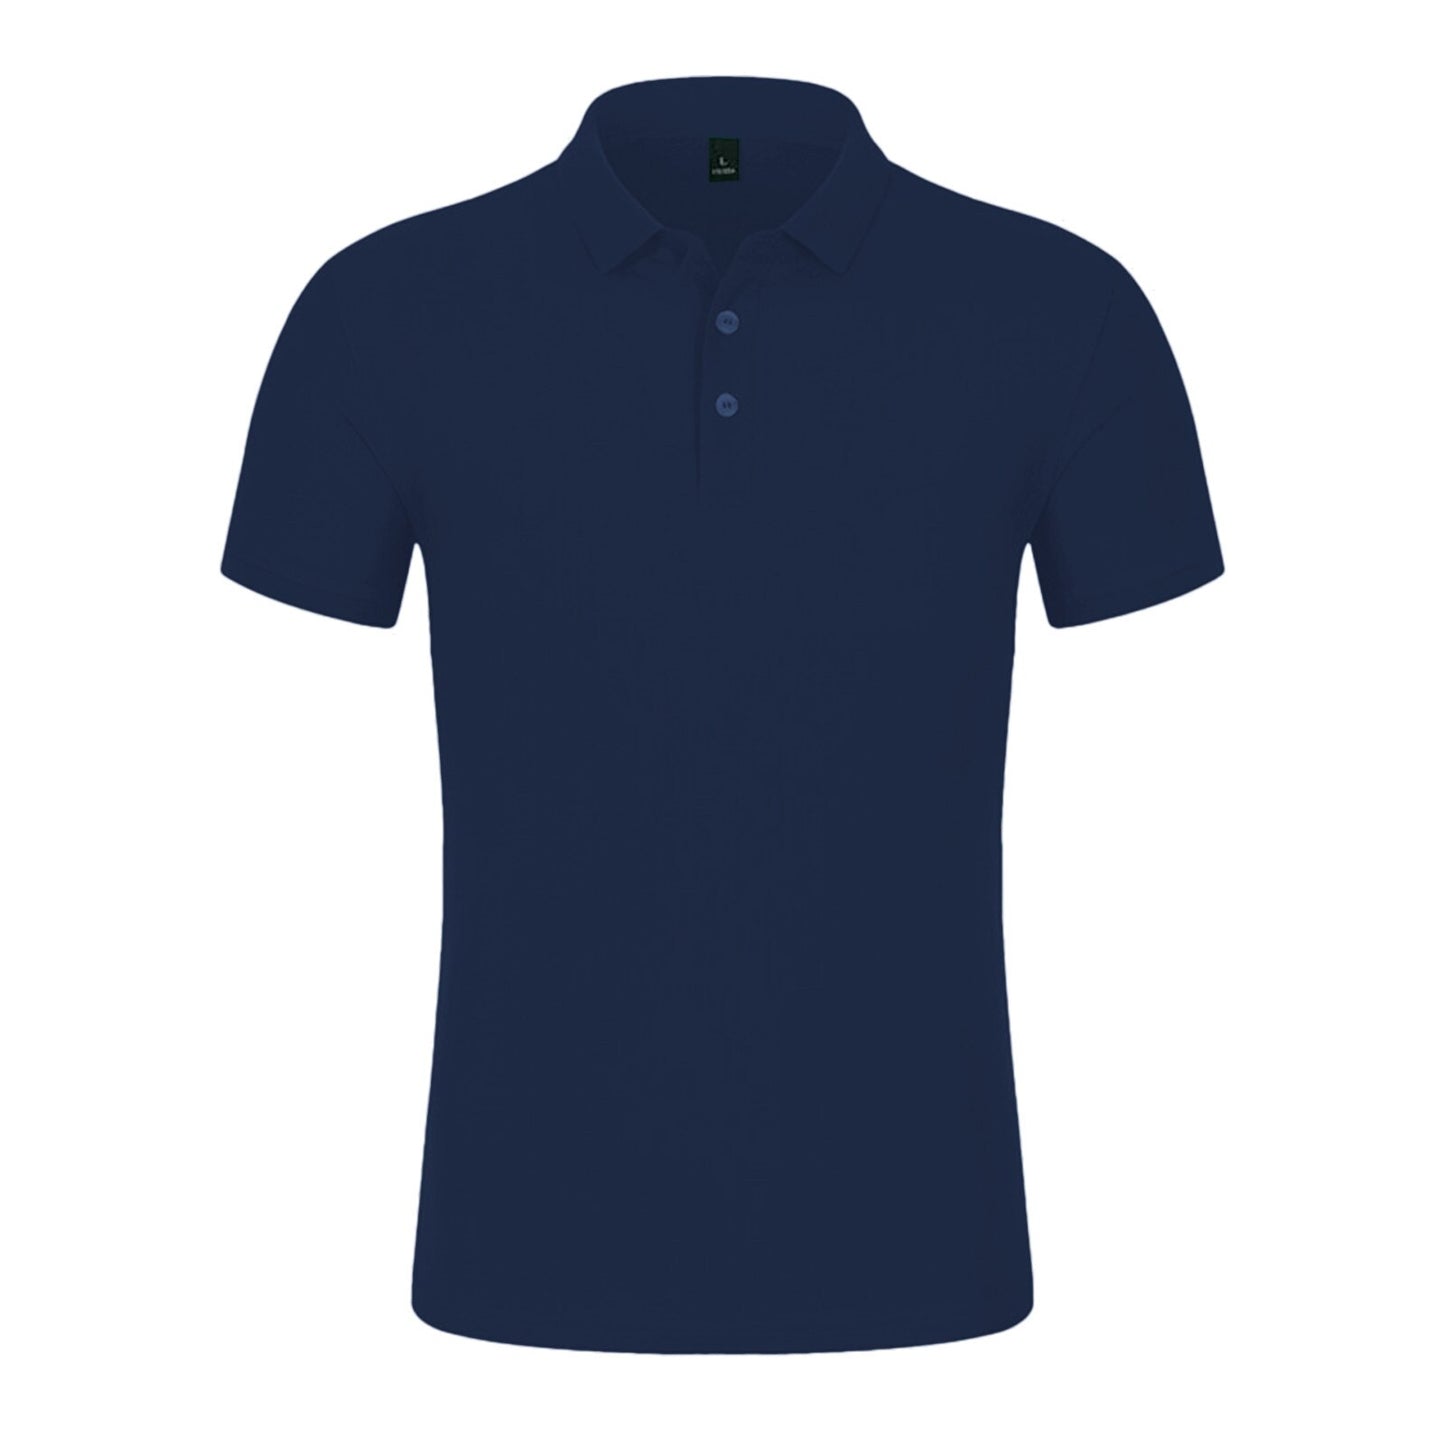 Men's Summer Polo Shirt Button Solid Color Turn Down Collar T-shirt Short Sleeve Black Office Daily Man Social Dress Tees Tops